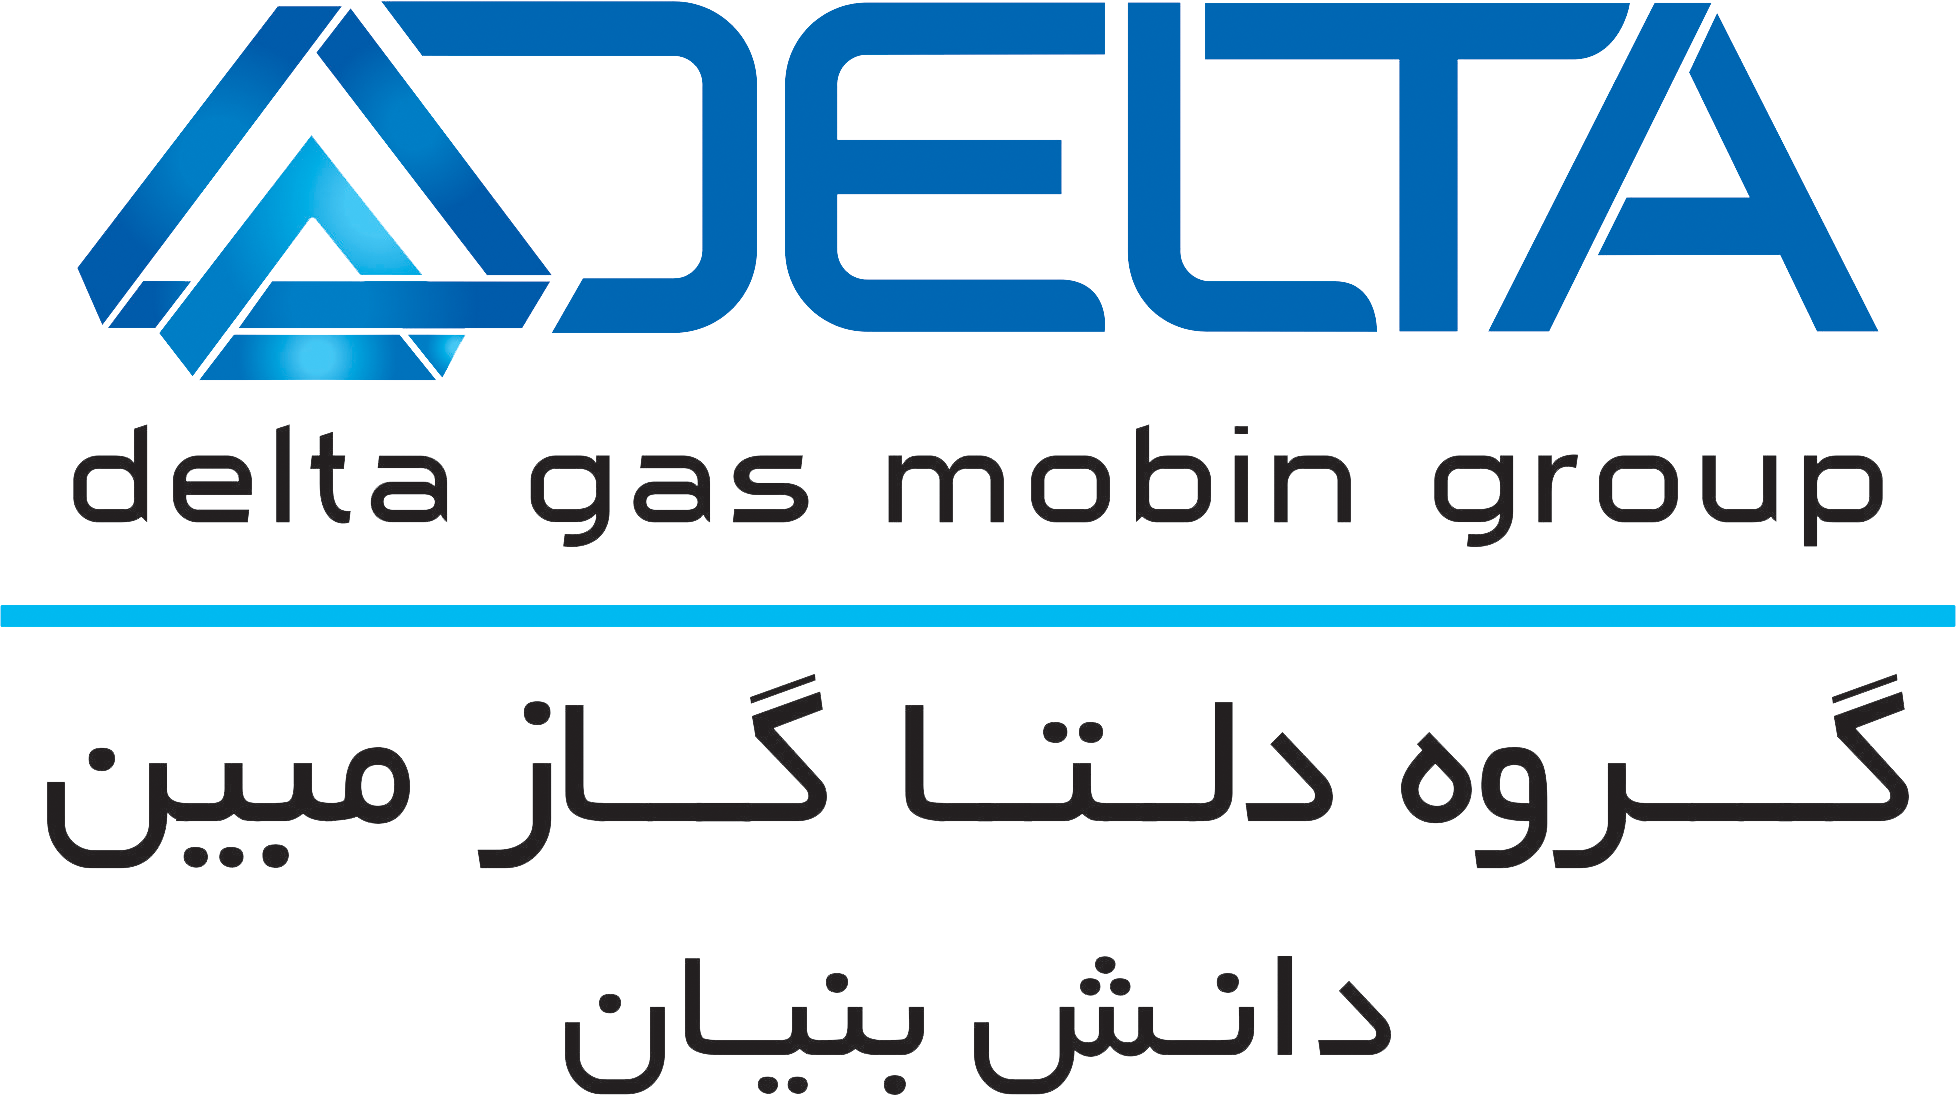 کارشناس کالیبراسیون | Calibration Expert - گروه دلتا گاز مبین | Delta Gas Mobin Group